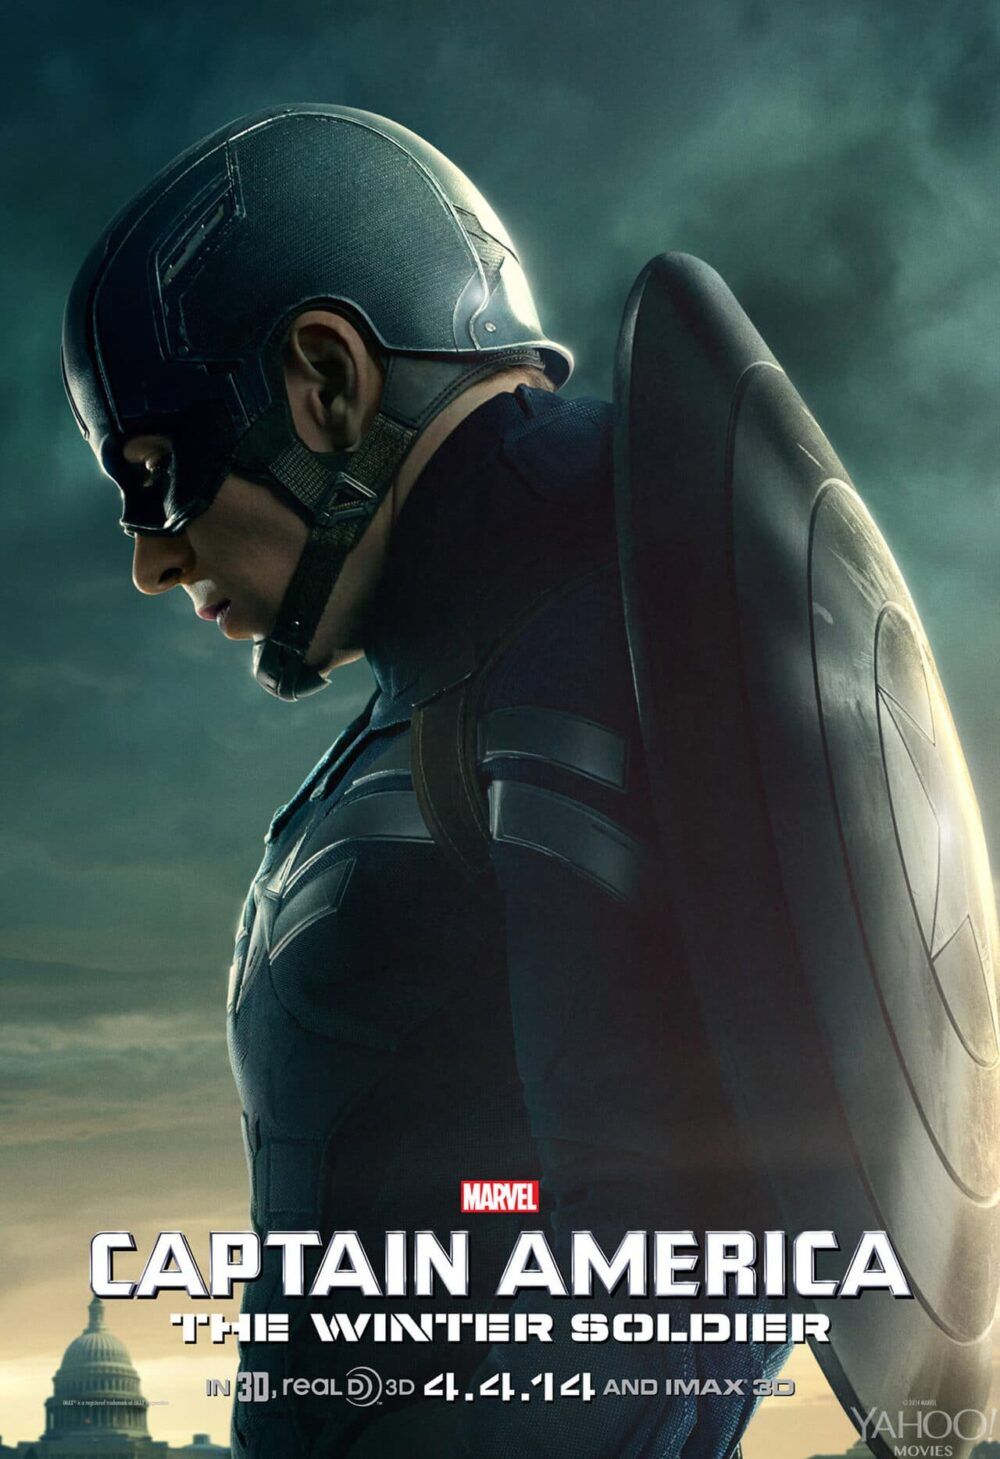 poster captain america e1583218109220 - Trăn trở suy tư cùng Captain America: The Winter Soldier